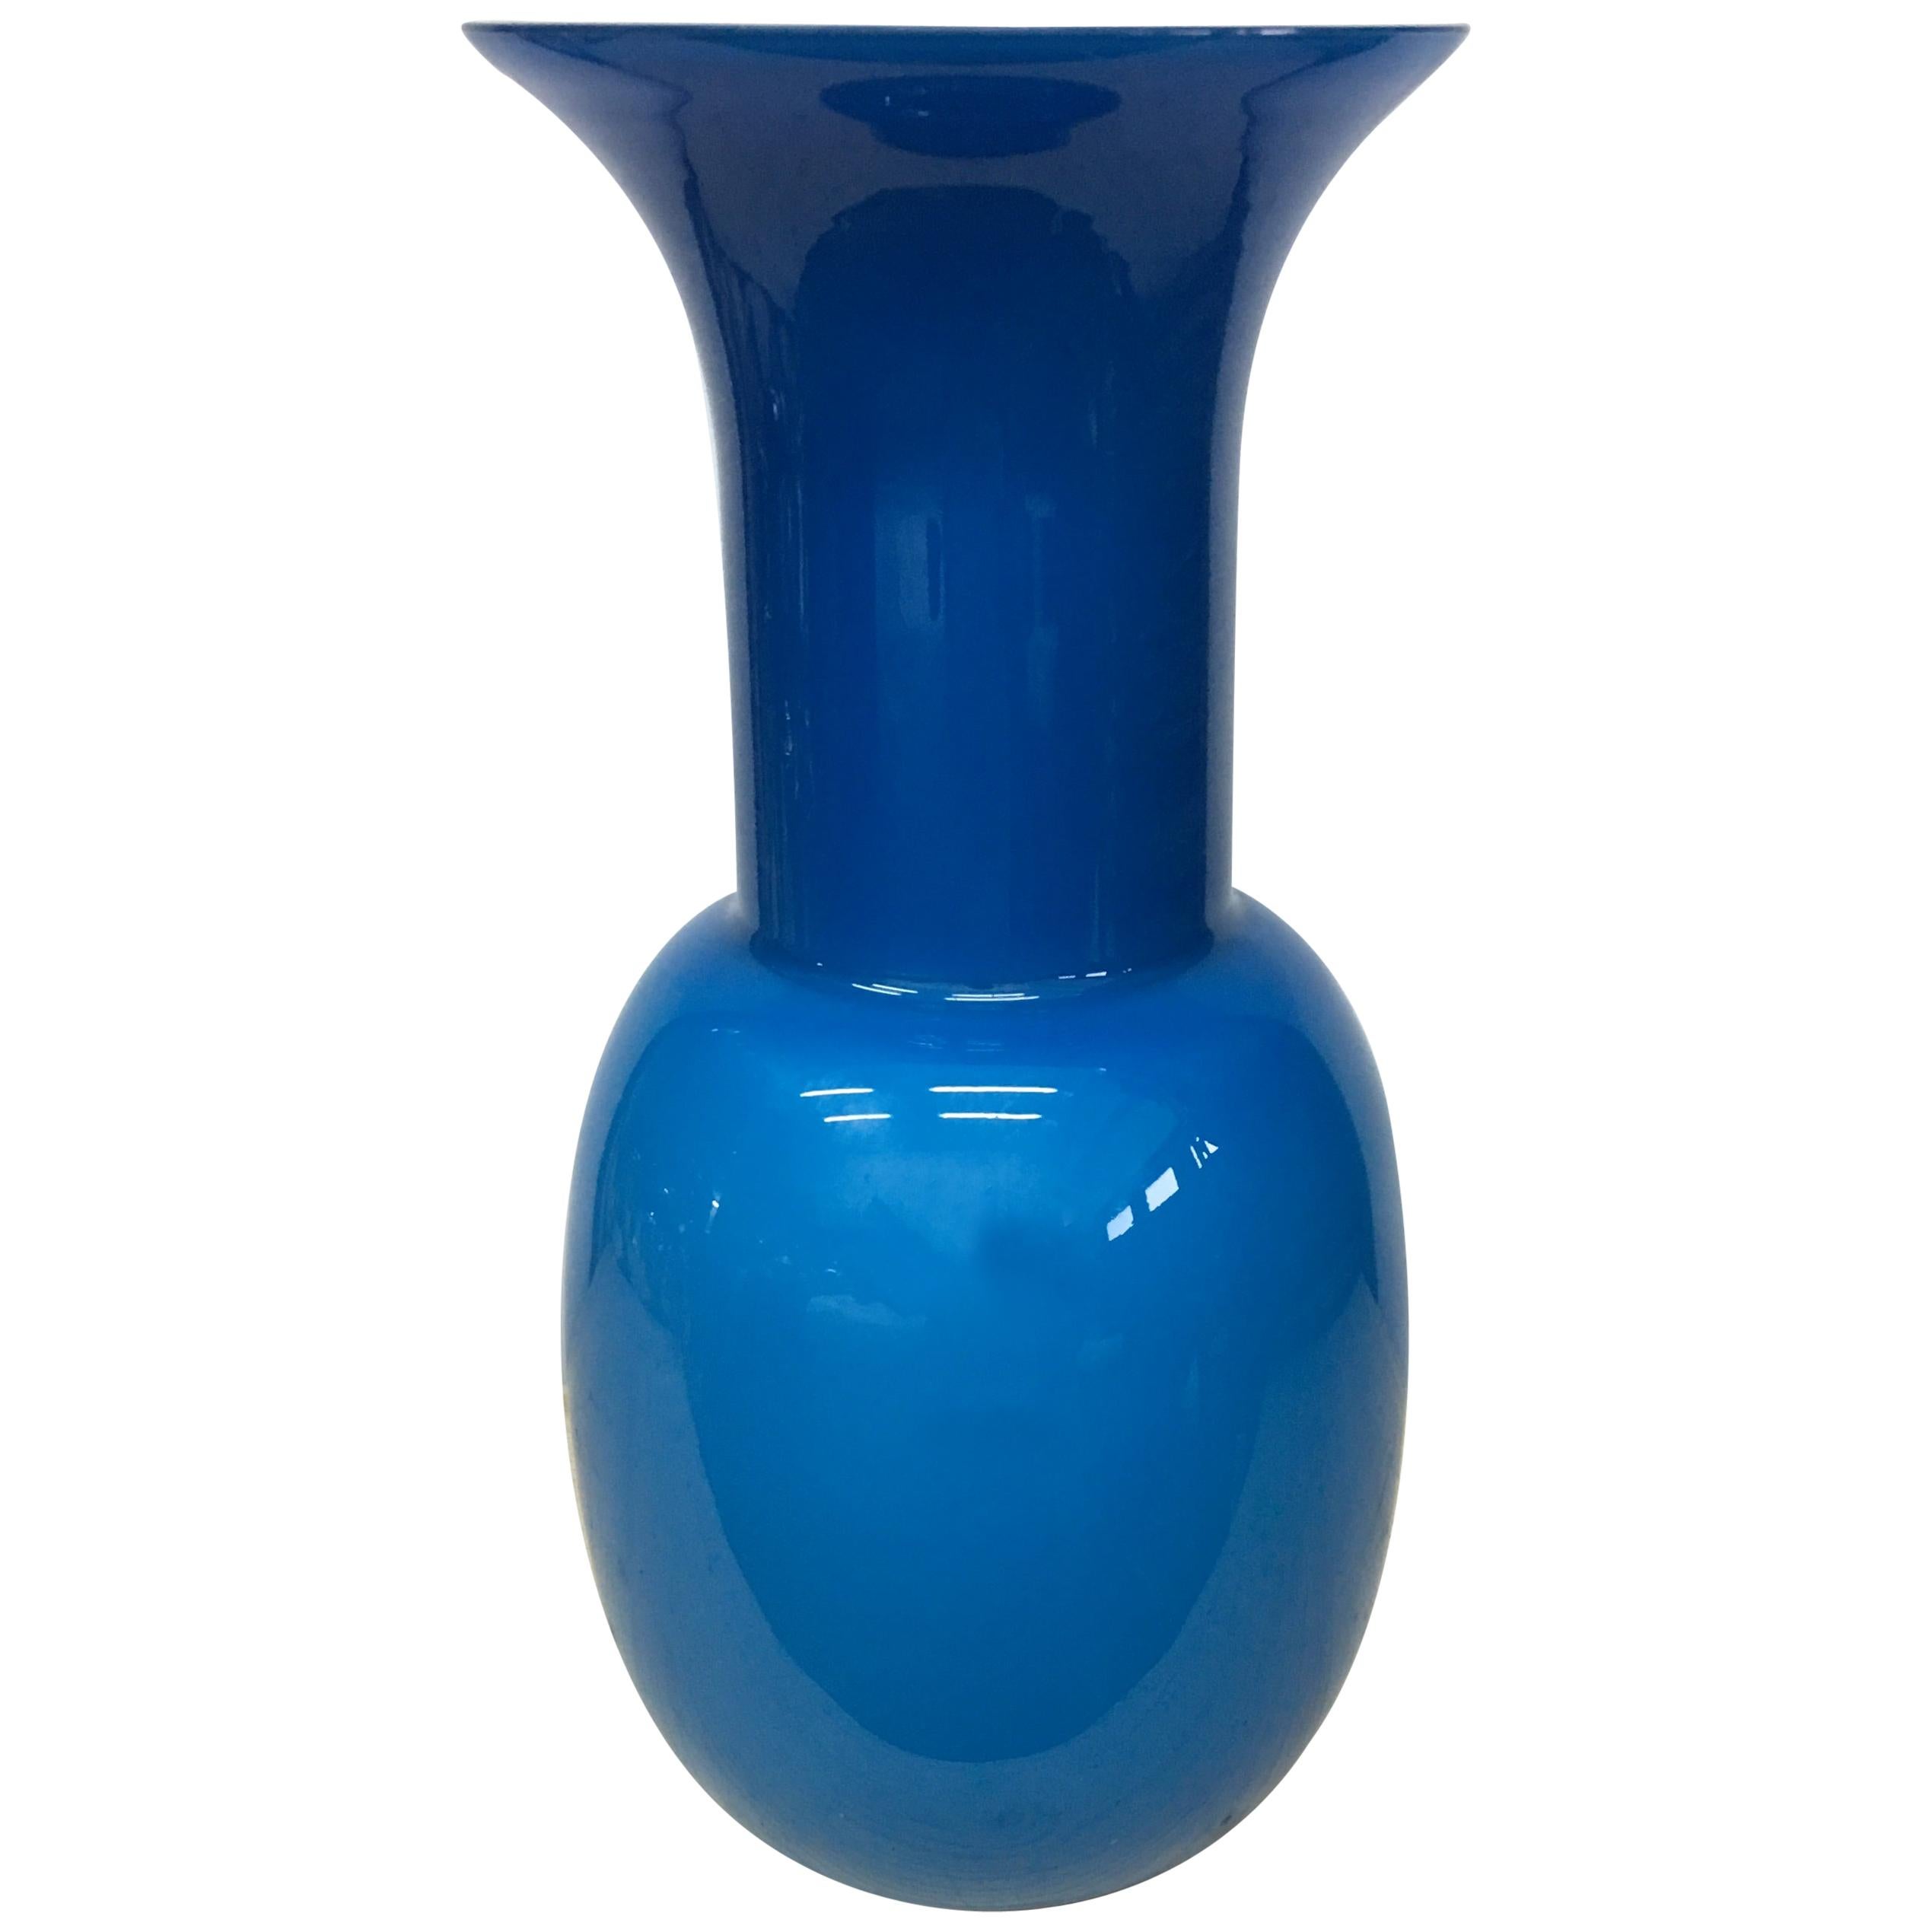 Modernist Aureliano Toso blue Murano Glass Vase, Italy, 2000